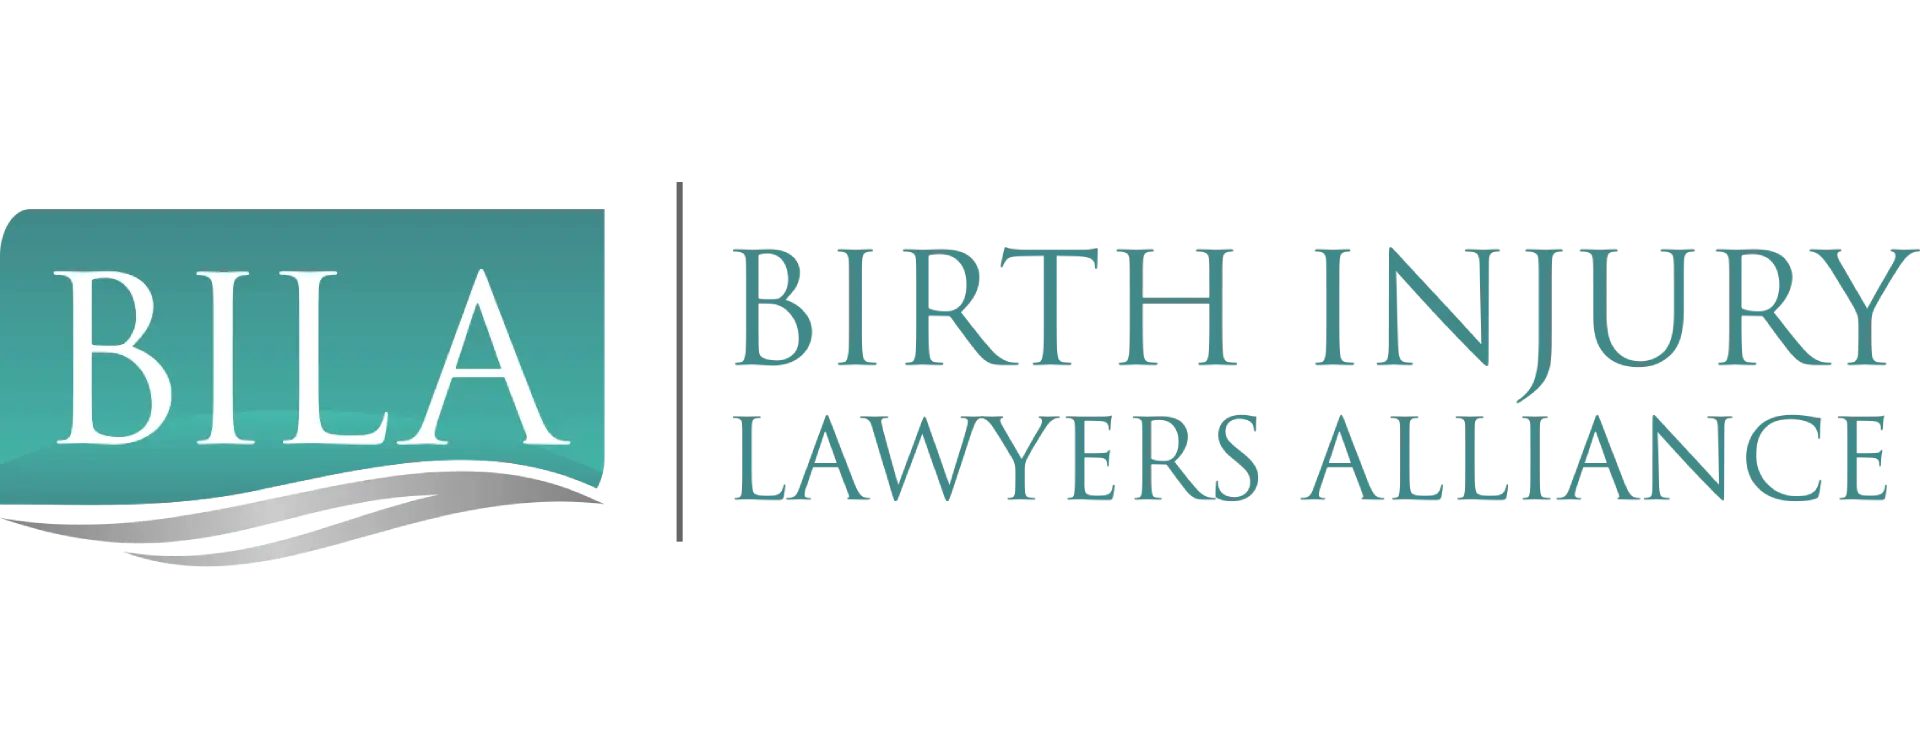 BILA Logo with the text "Birth Injury Lawyers Alliance" next to the logo.